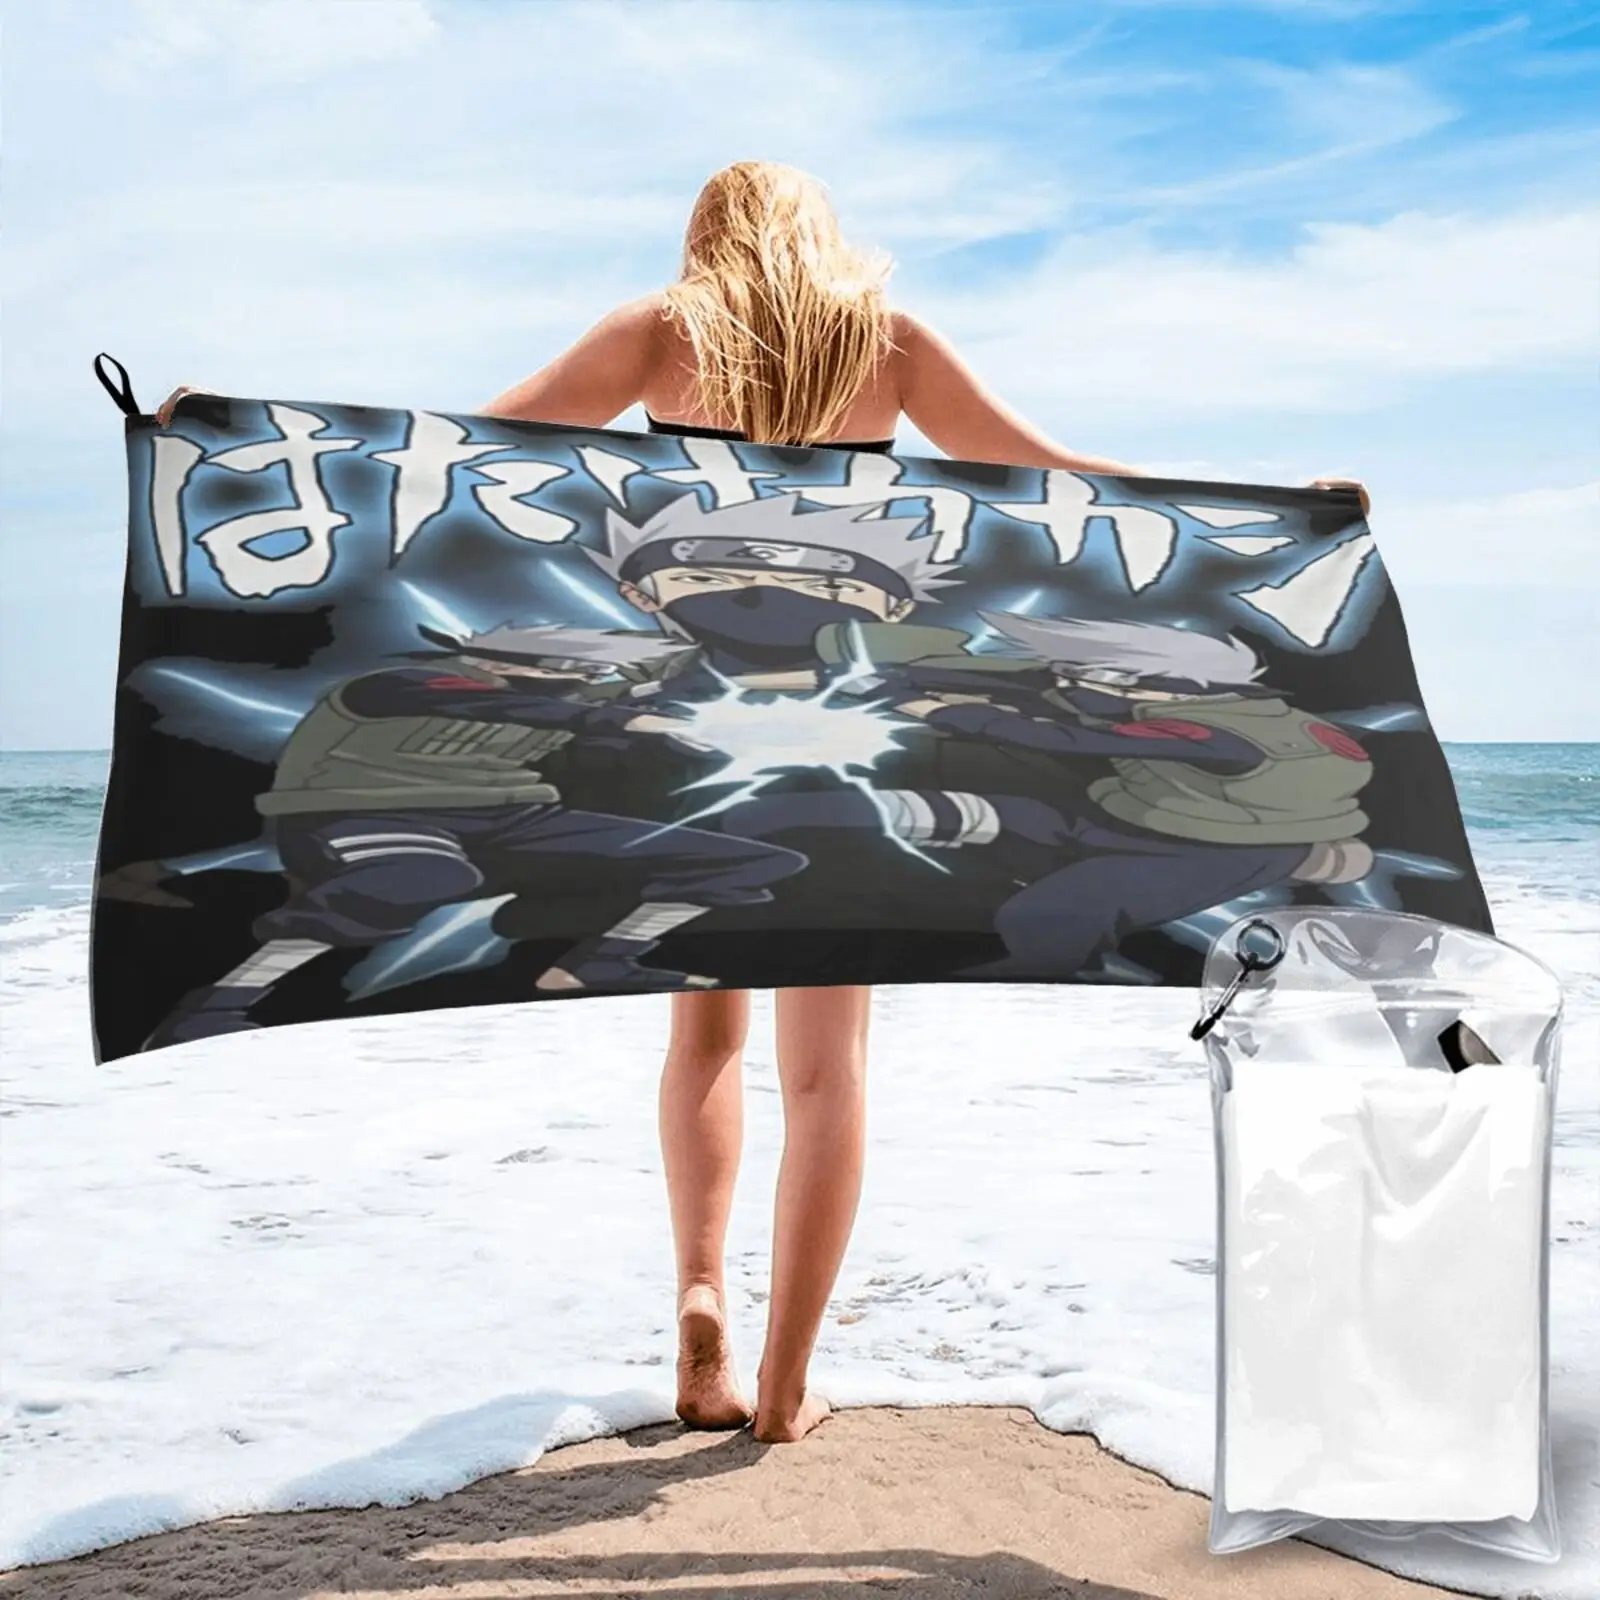 

Лицензионное полотенце Shippuden Kakashi Hatake, Большое банное полотенце, морское пляжное полотенце, полотенце для рук, махровое полотенце, роскошное...